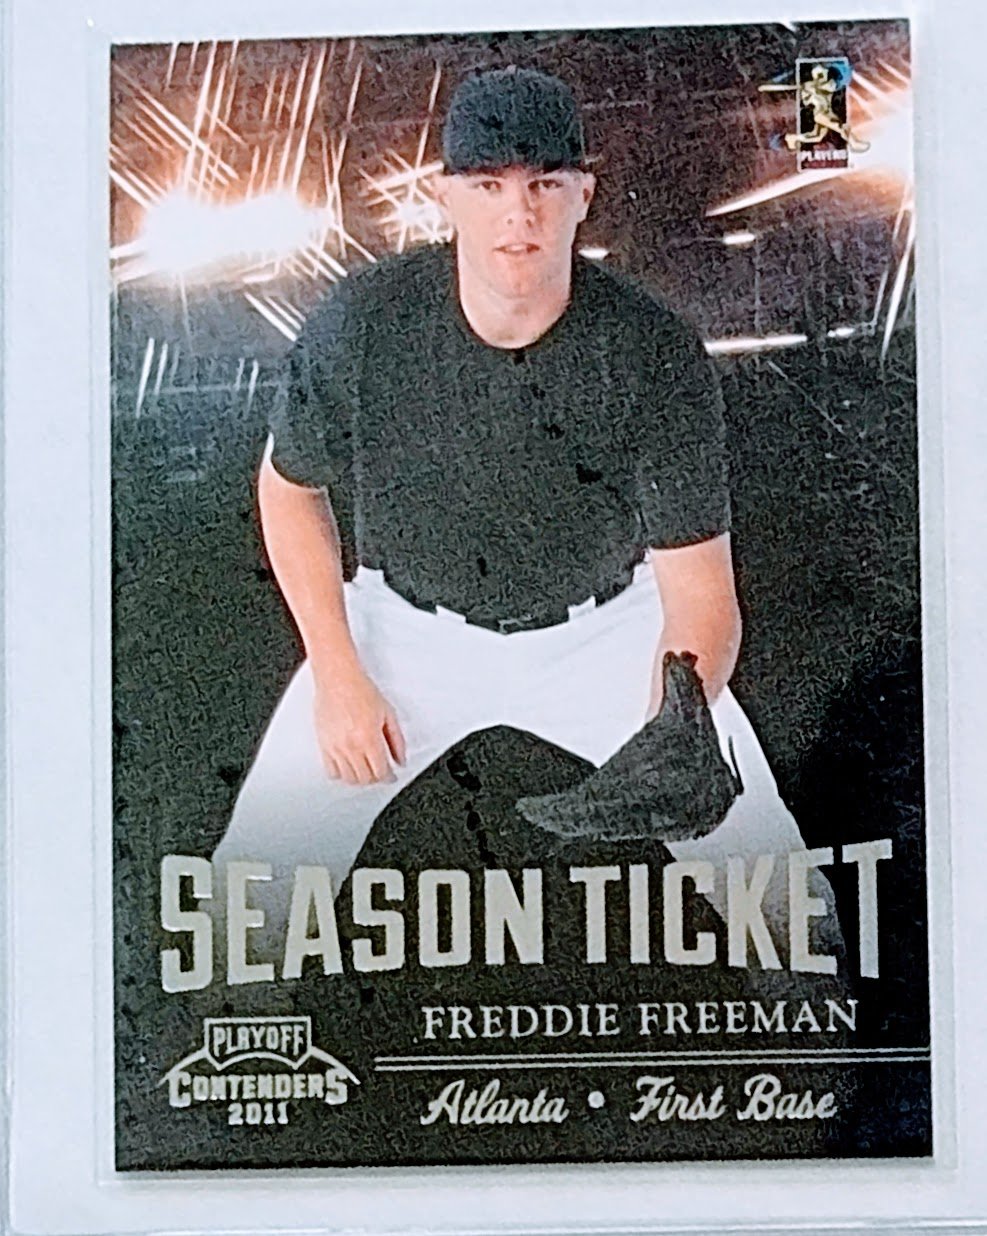 2011 Panini Playoff Contenders Freddie Freeman Season Ticket Baseball Card TPTV simple Xclusive Collectibles   